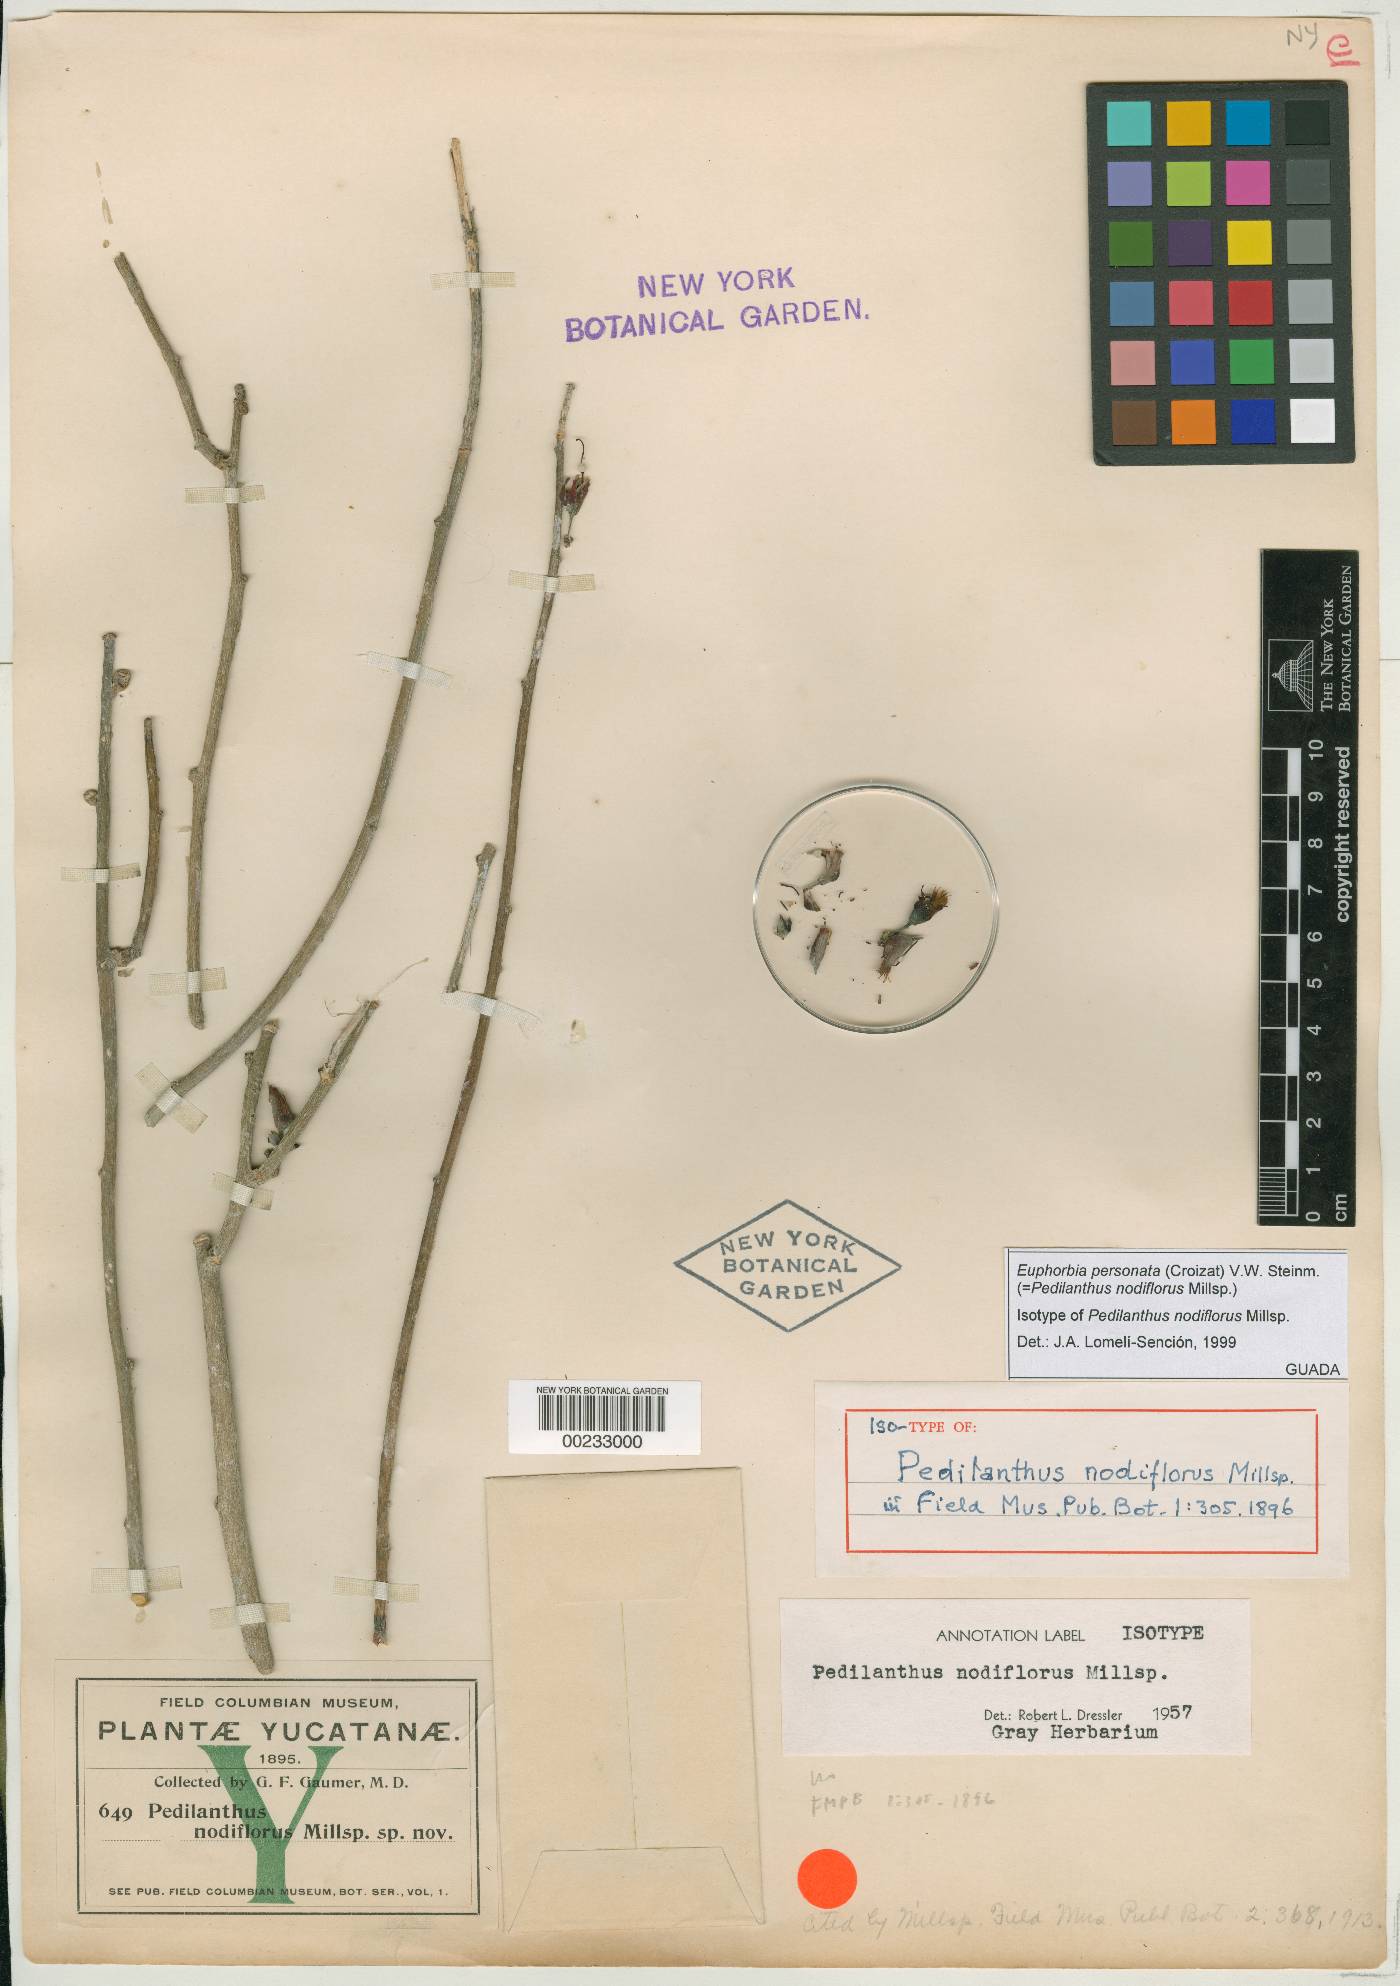 Euphorbia personata image